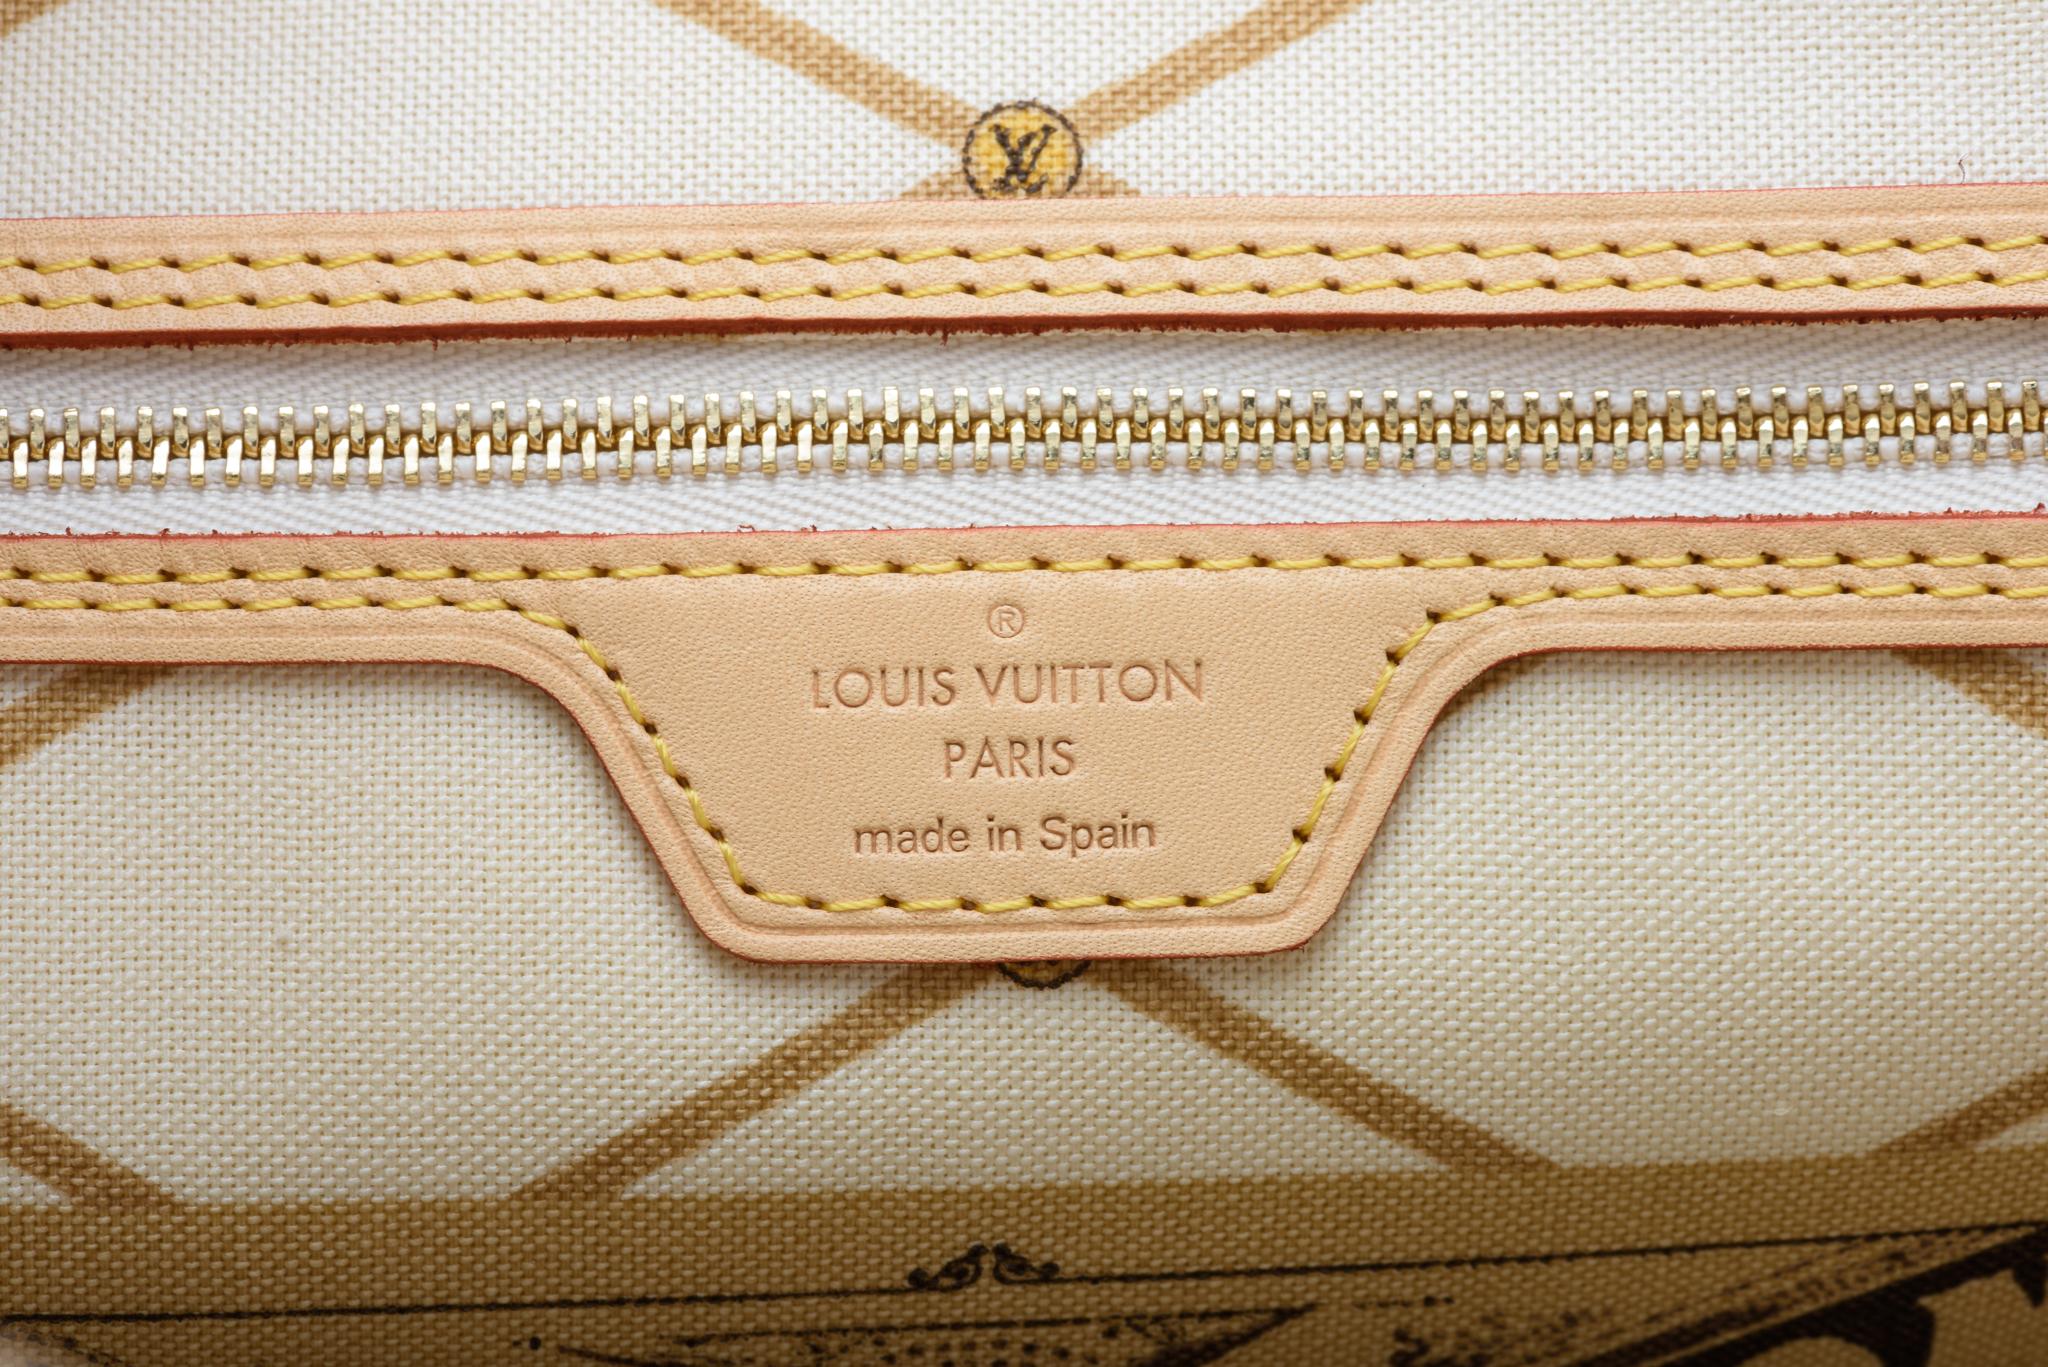 New in Box Louis Vuitton Limited Edition Capri Neverfull Damier Azur Bag 4